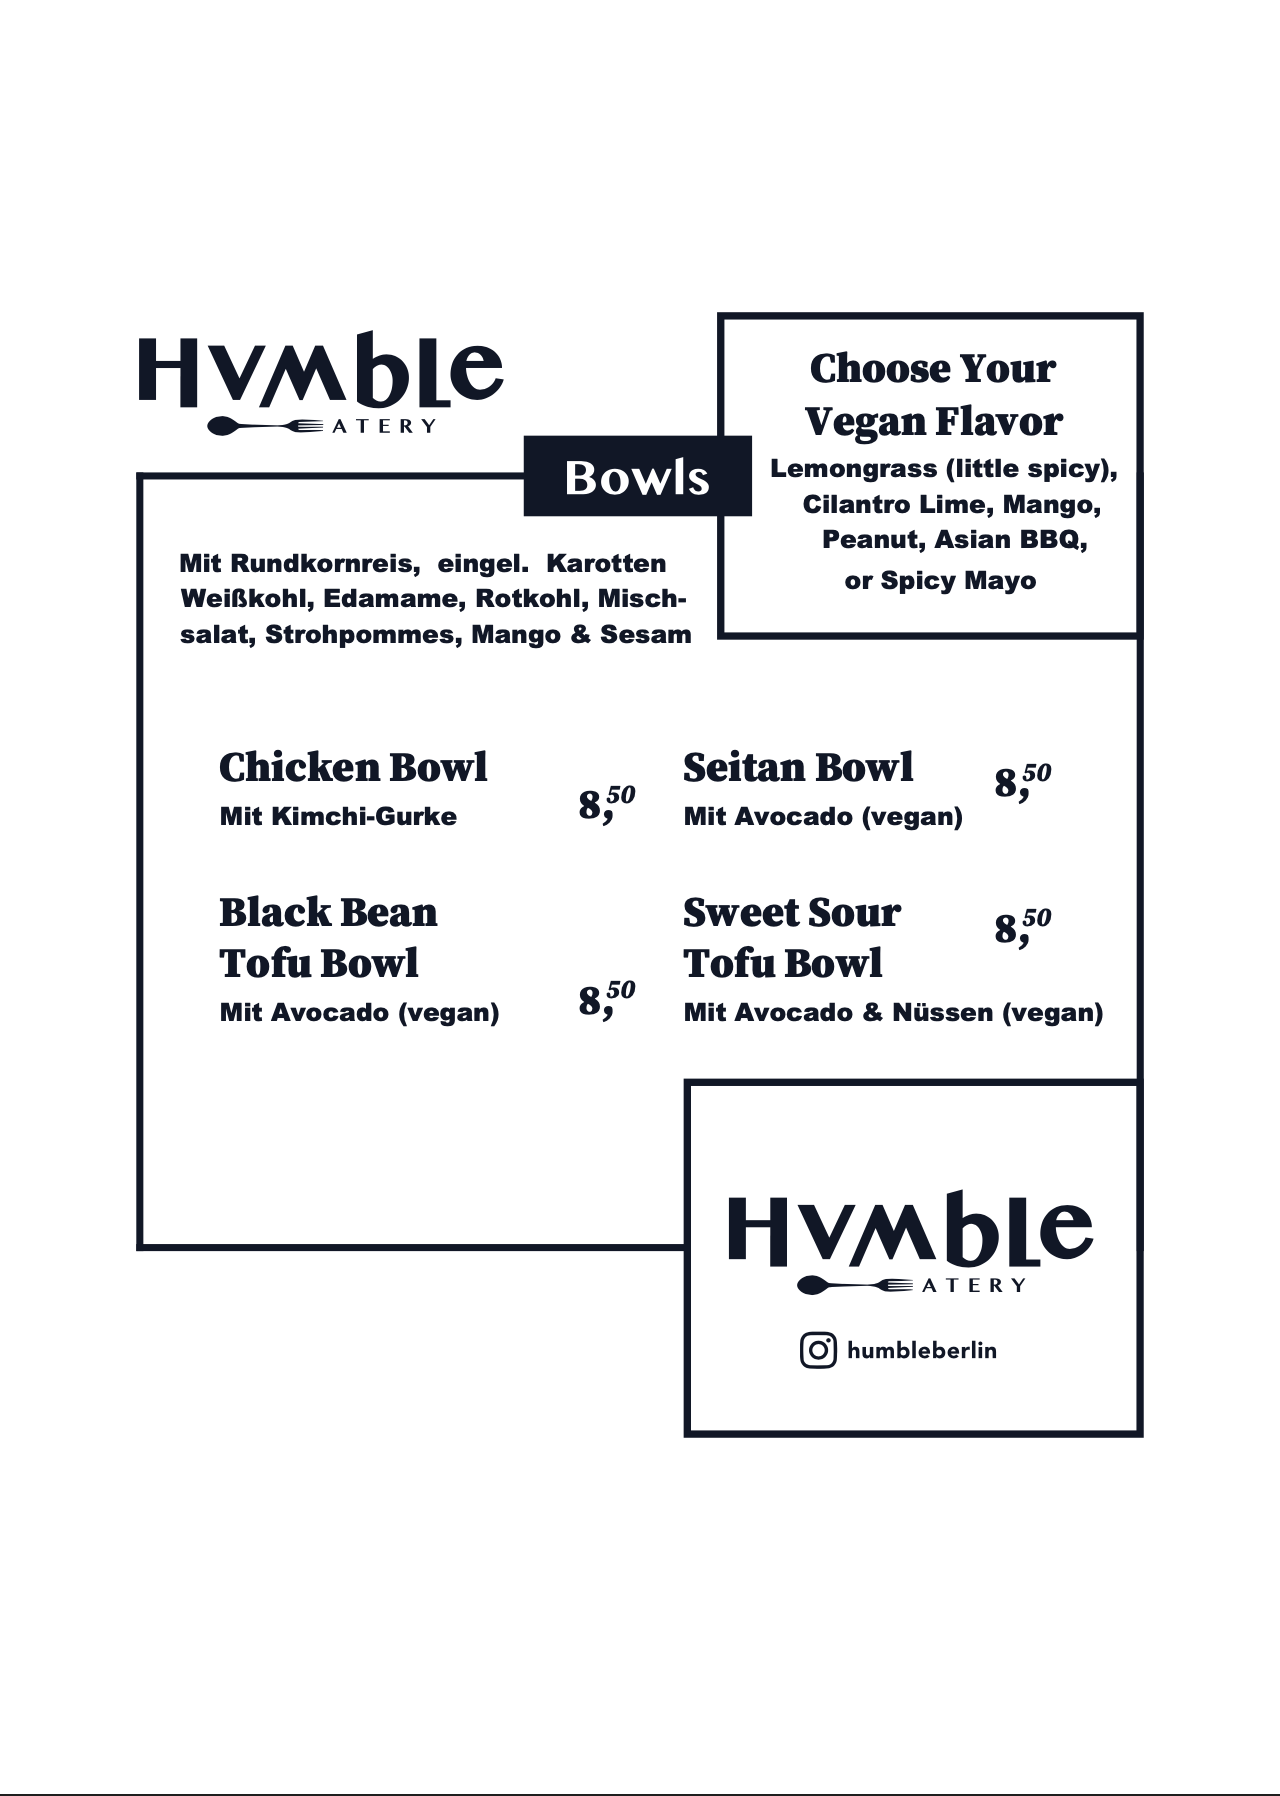 Humble Berlin Speisekarte 1 — chicken Bowl, Vegan Seitan Bowl, Vegan Sweet Sour Tofu Bowl, Vegan Black Bean Tofu Bowl